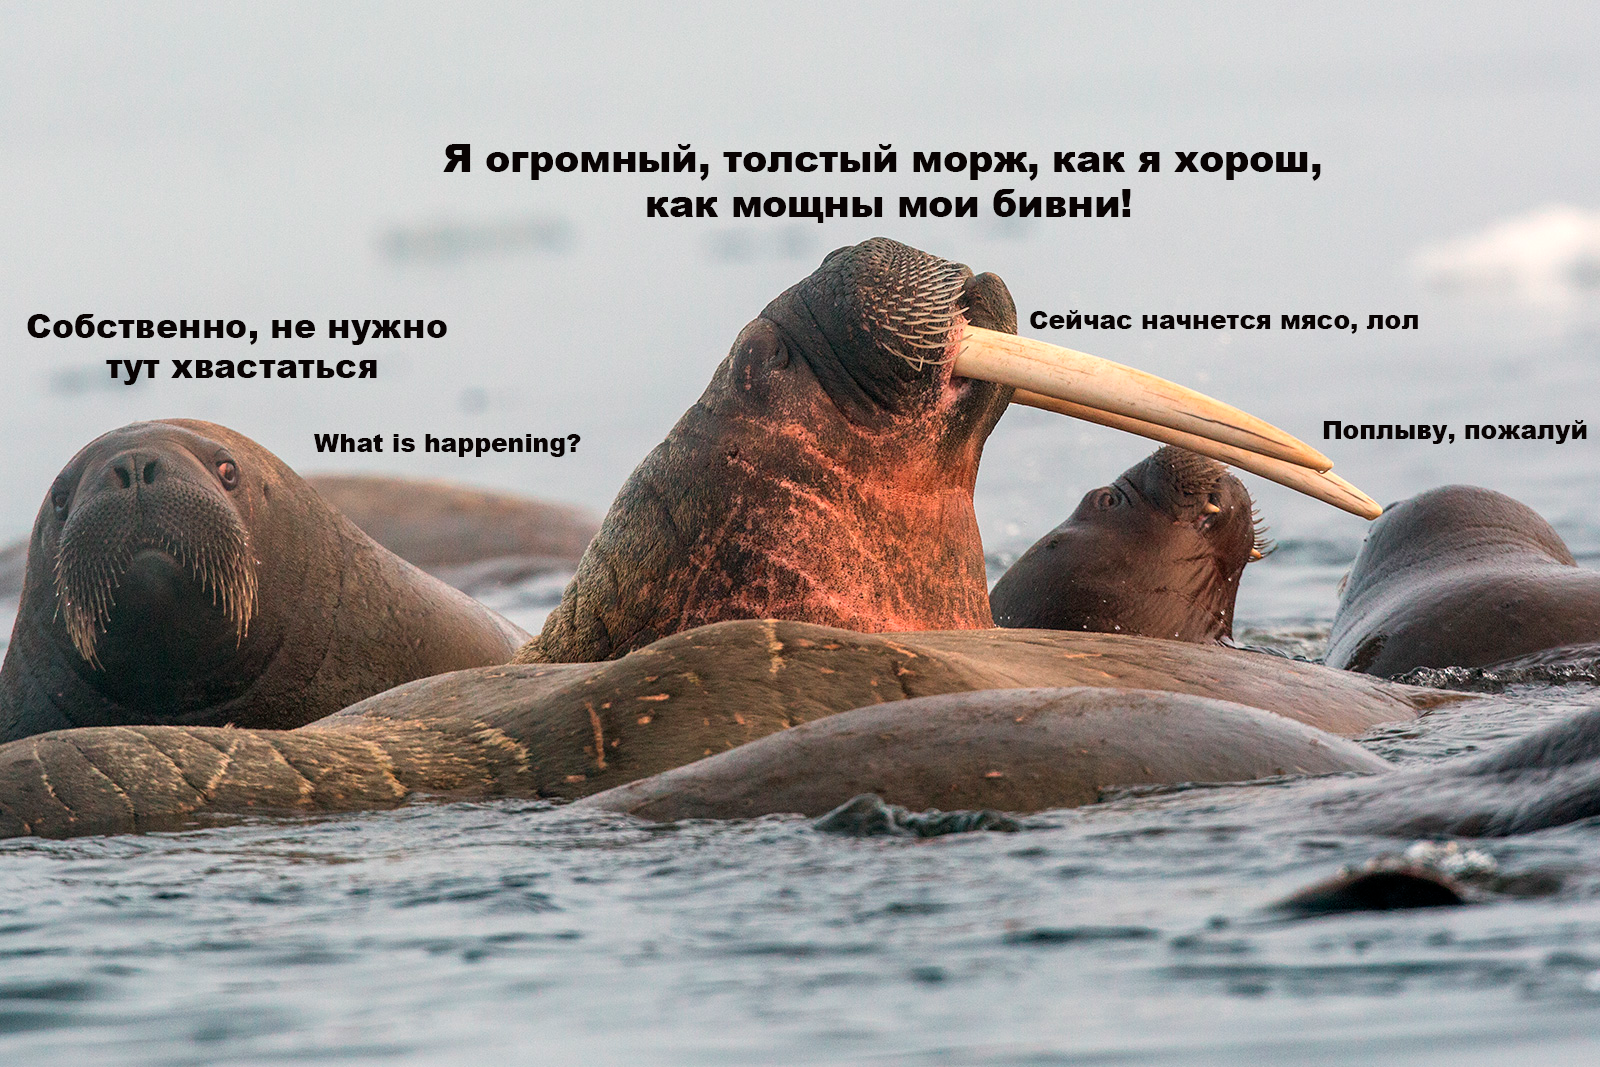 Dominant tusks of walrus Alexei - Walruses, Animals, The photo, Classic